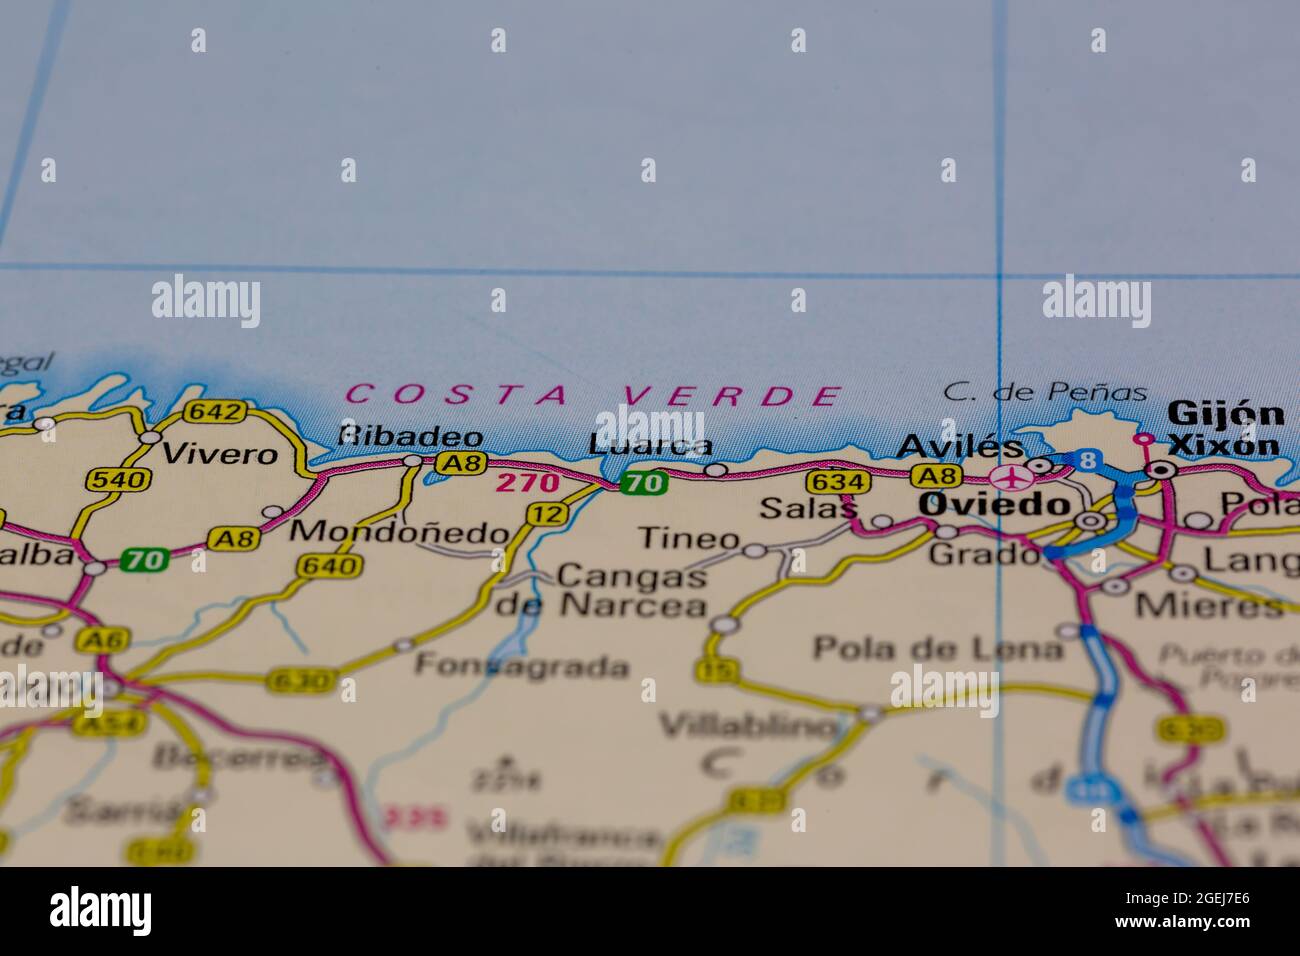 Luarca España aparece en un mapa de carreteras o en un mapa geográfico Foto de stock